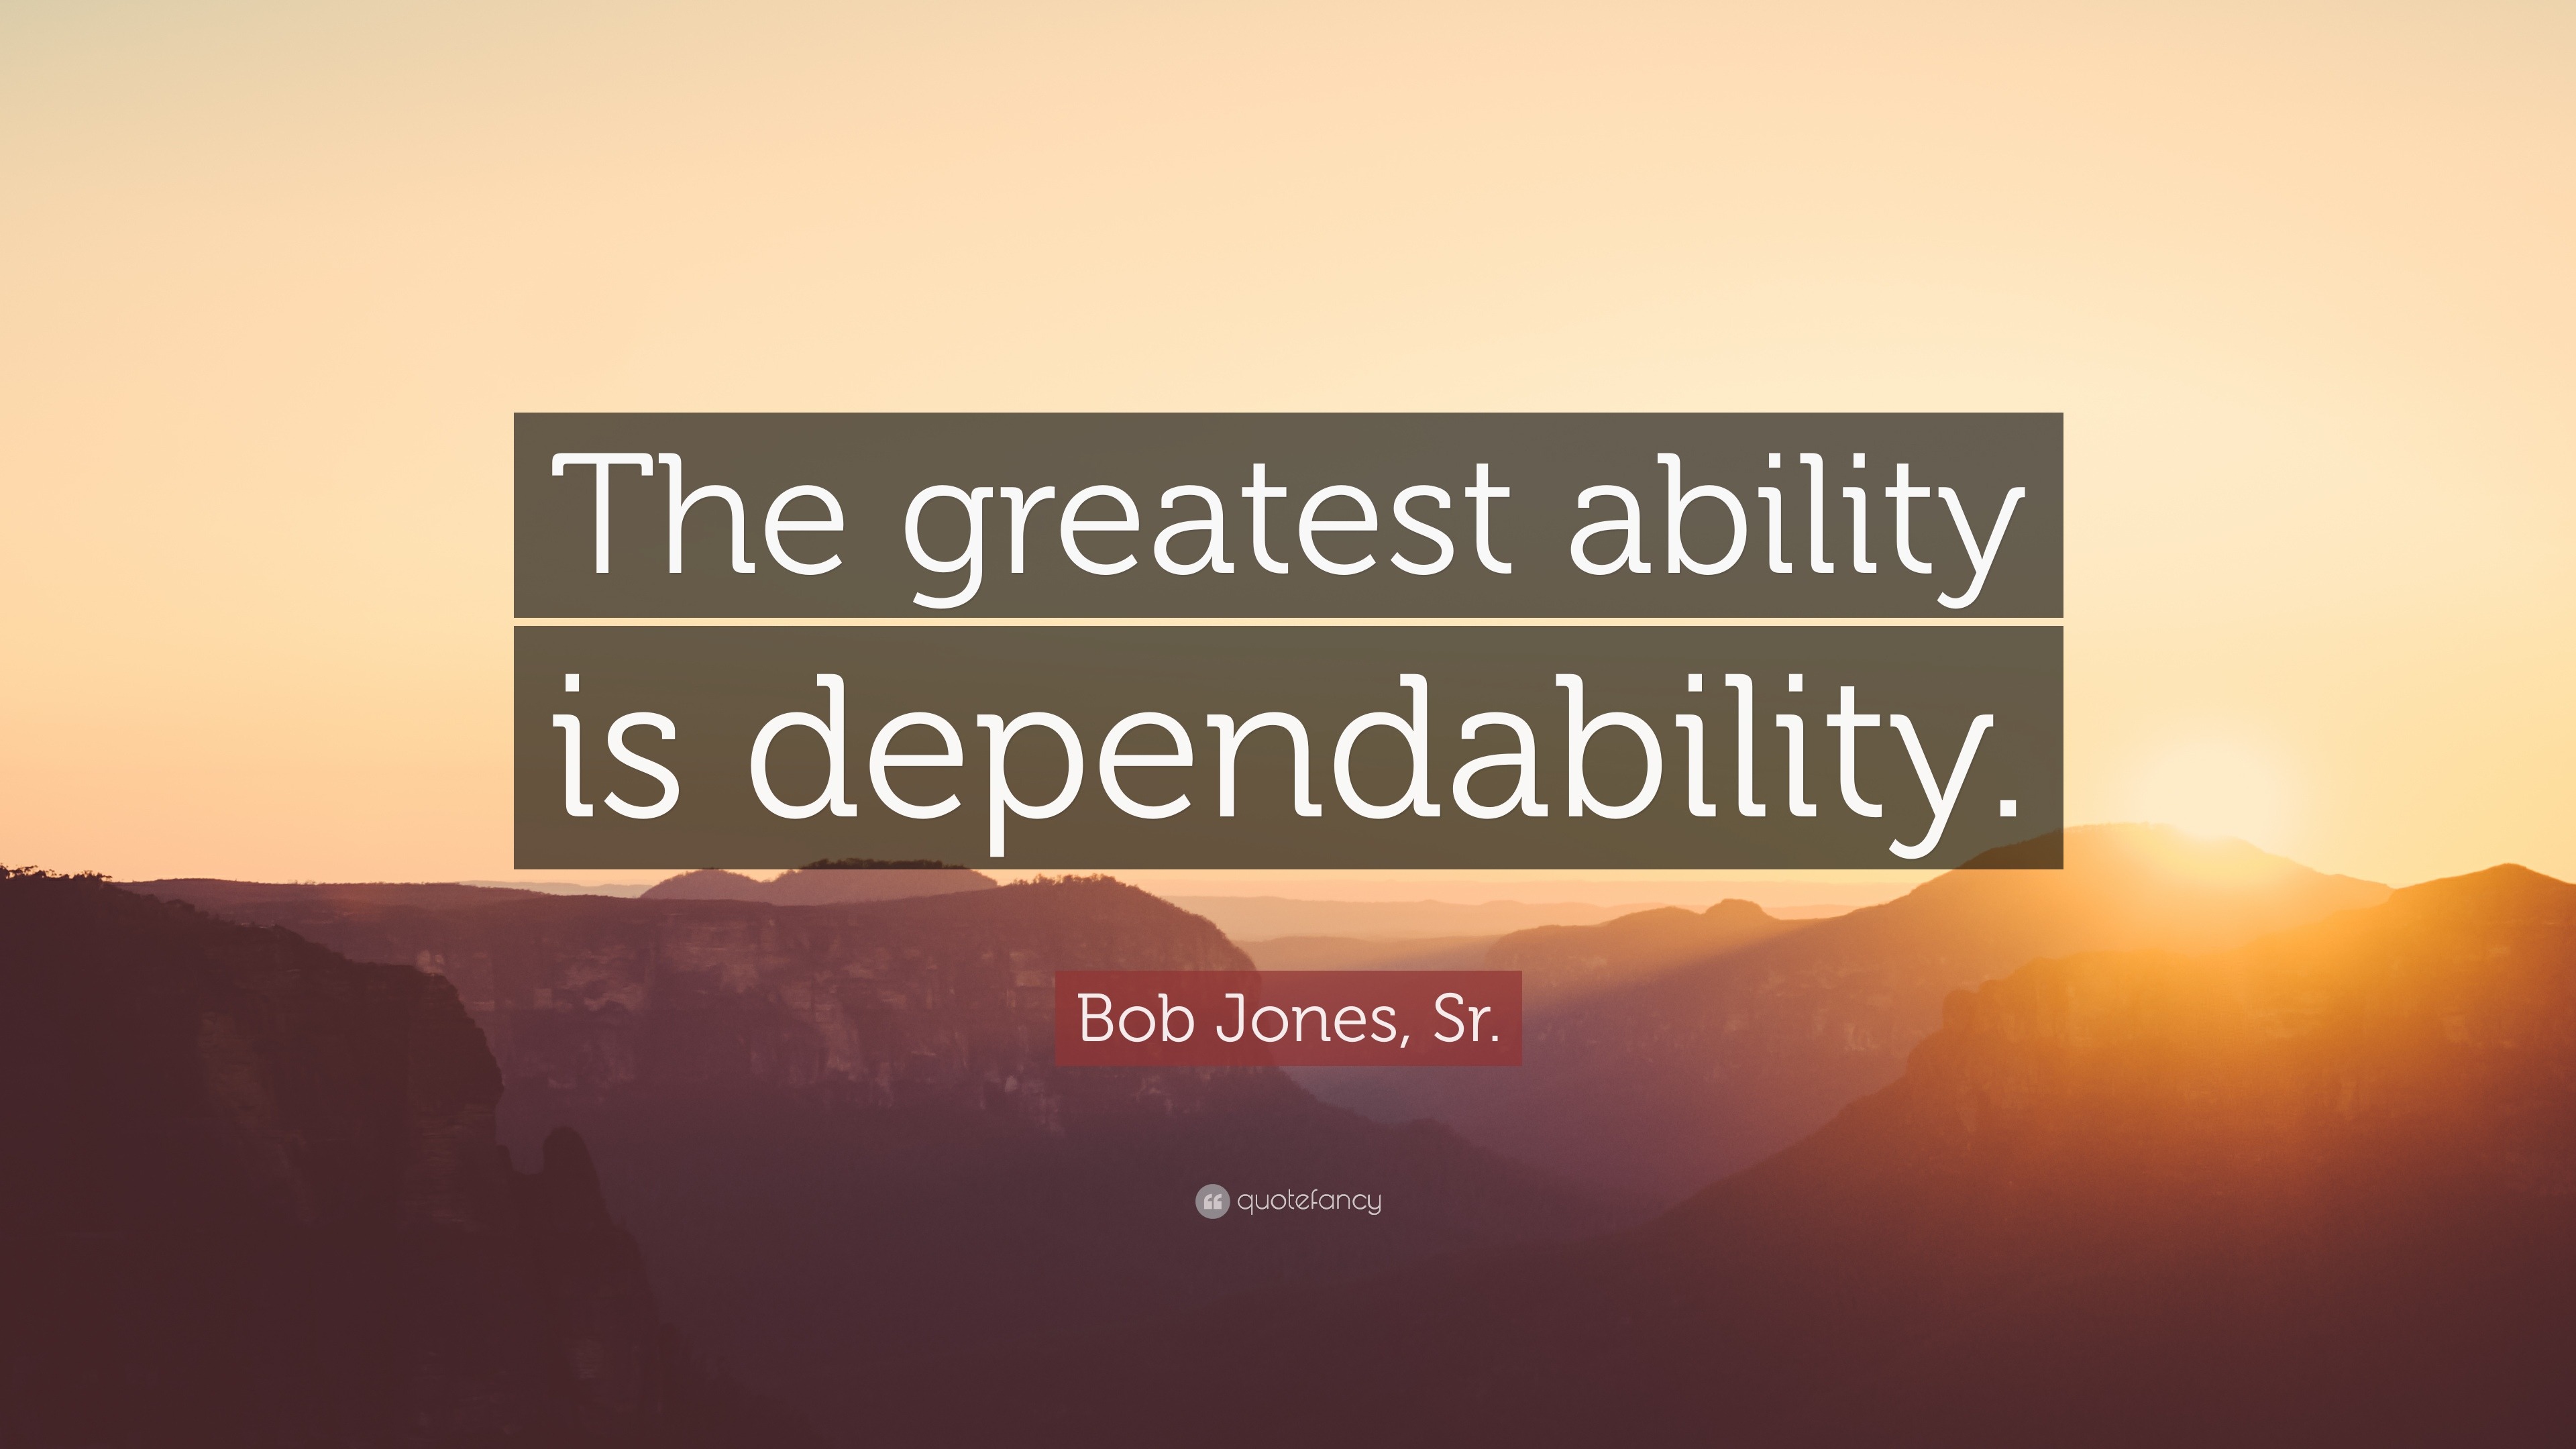 Bob Jones, Sr. Quote: "The greatest ability is dependability."